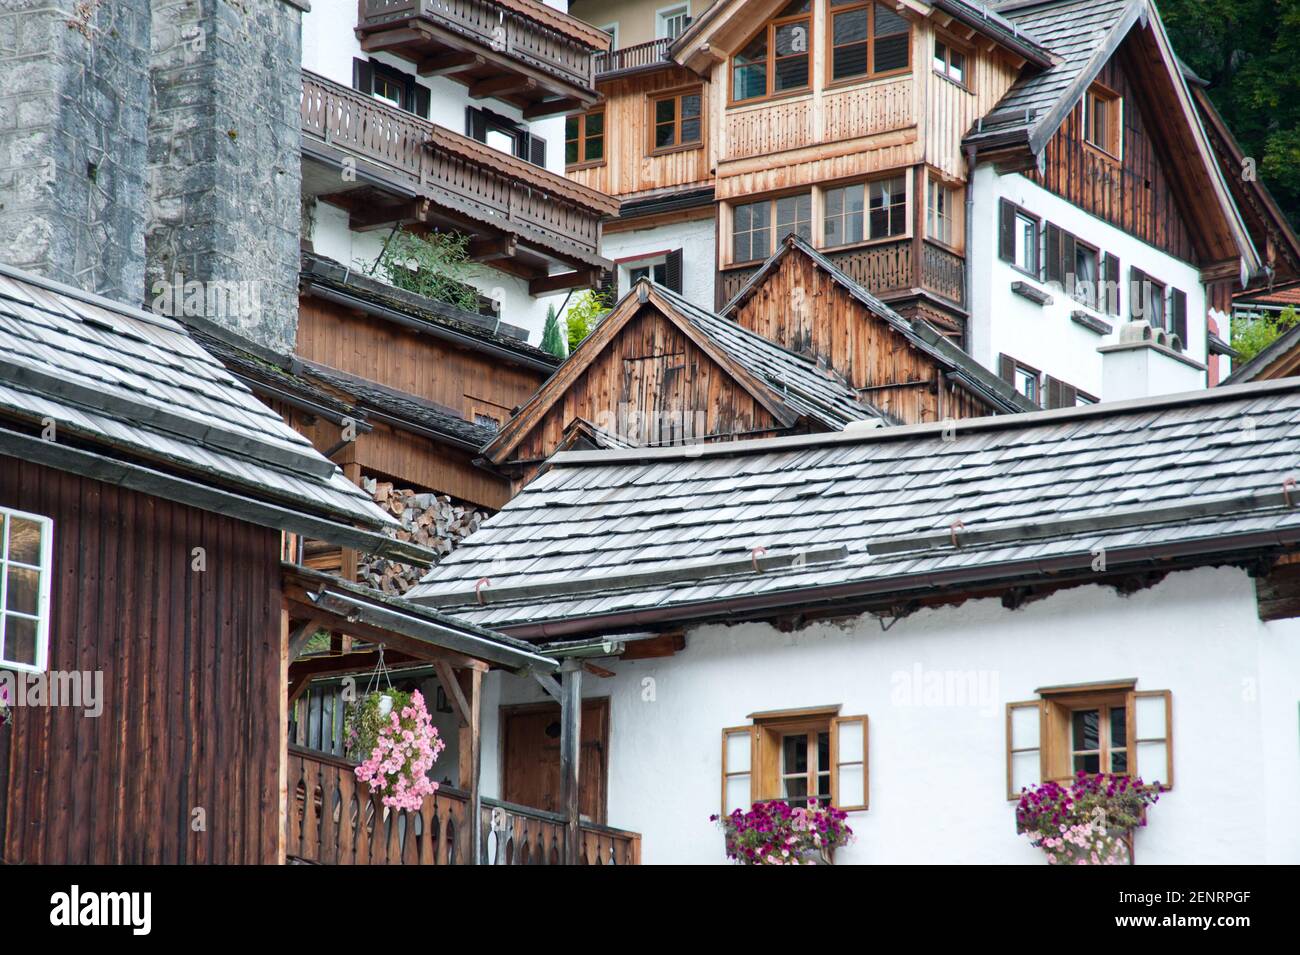 details of houses with wooden roofsclose side by side in the village of Hallstatt, Hallstatt, Salzkammergut, Austria Stock Photo